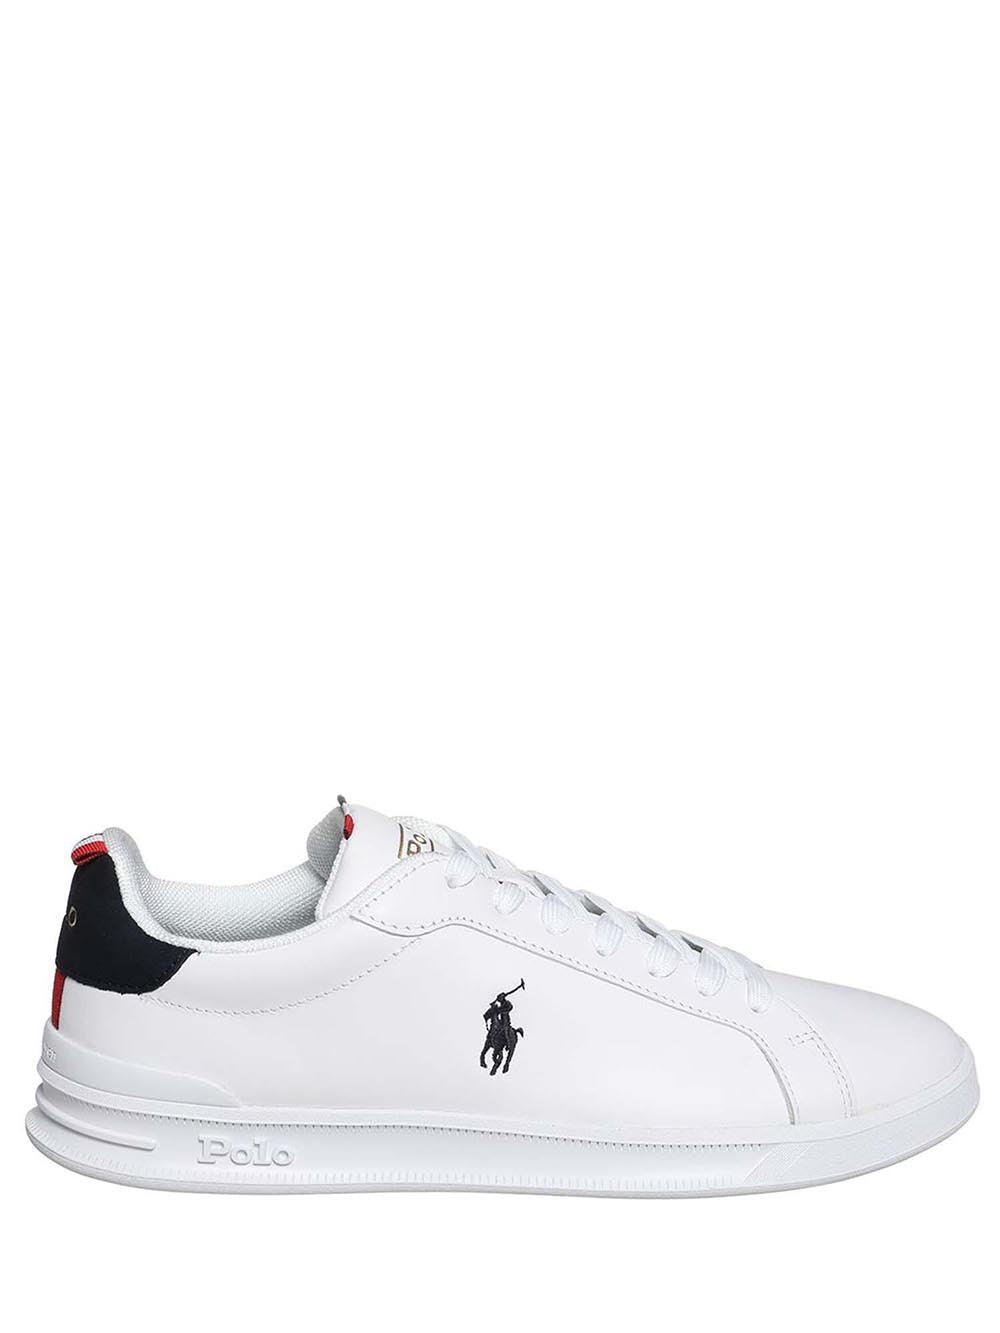 Polo Ralph Lauren Sneakers Uomo 809860883 Bianco